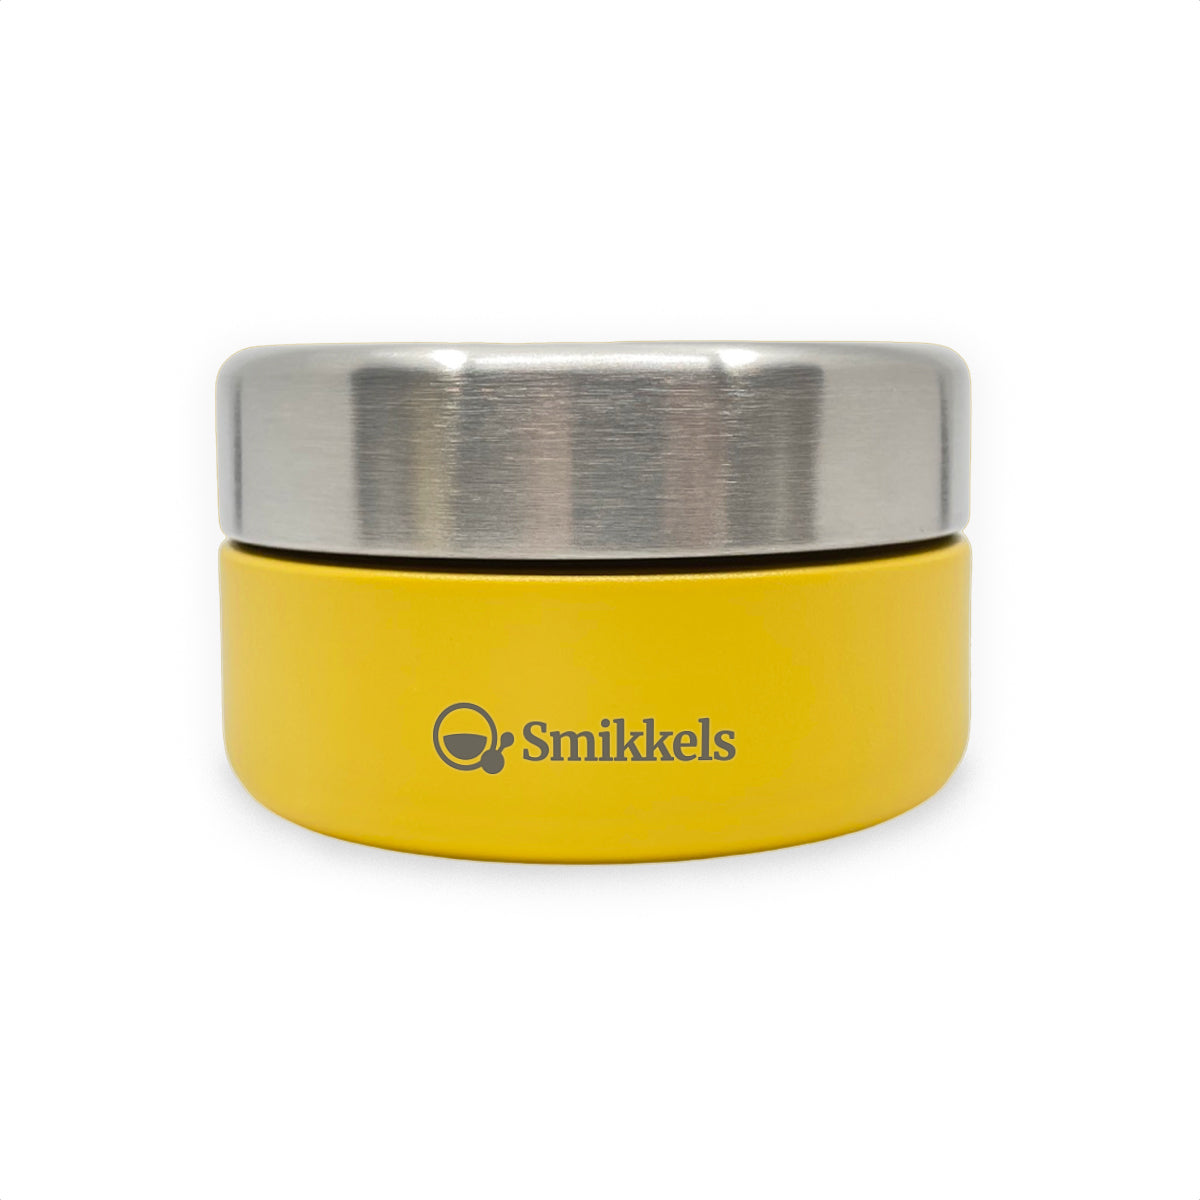 Smikkels - RVS fruit box 280 ml - yellow